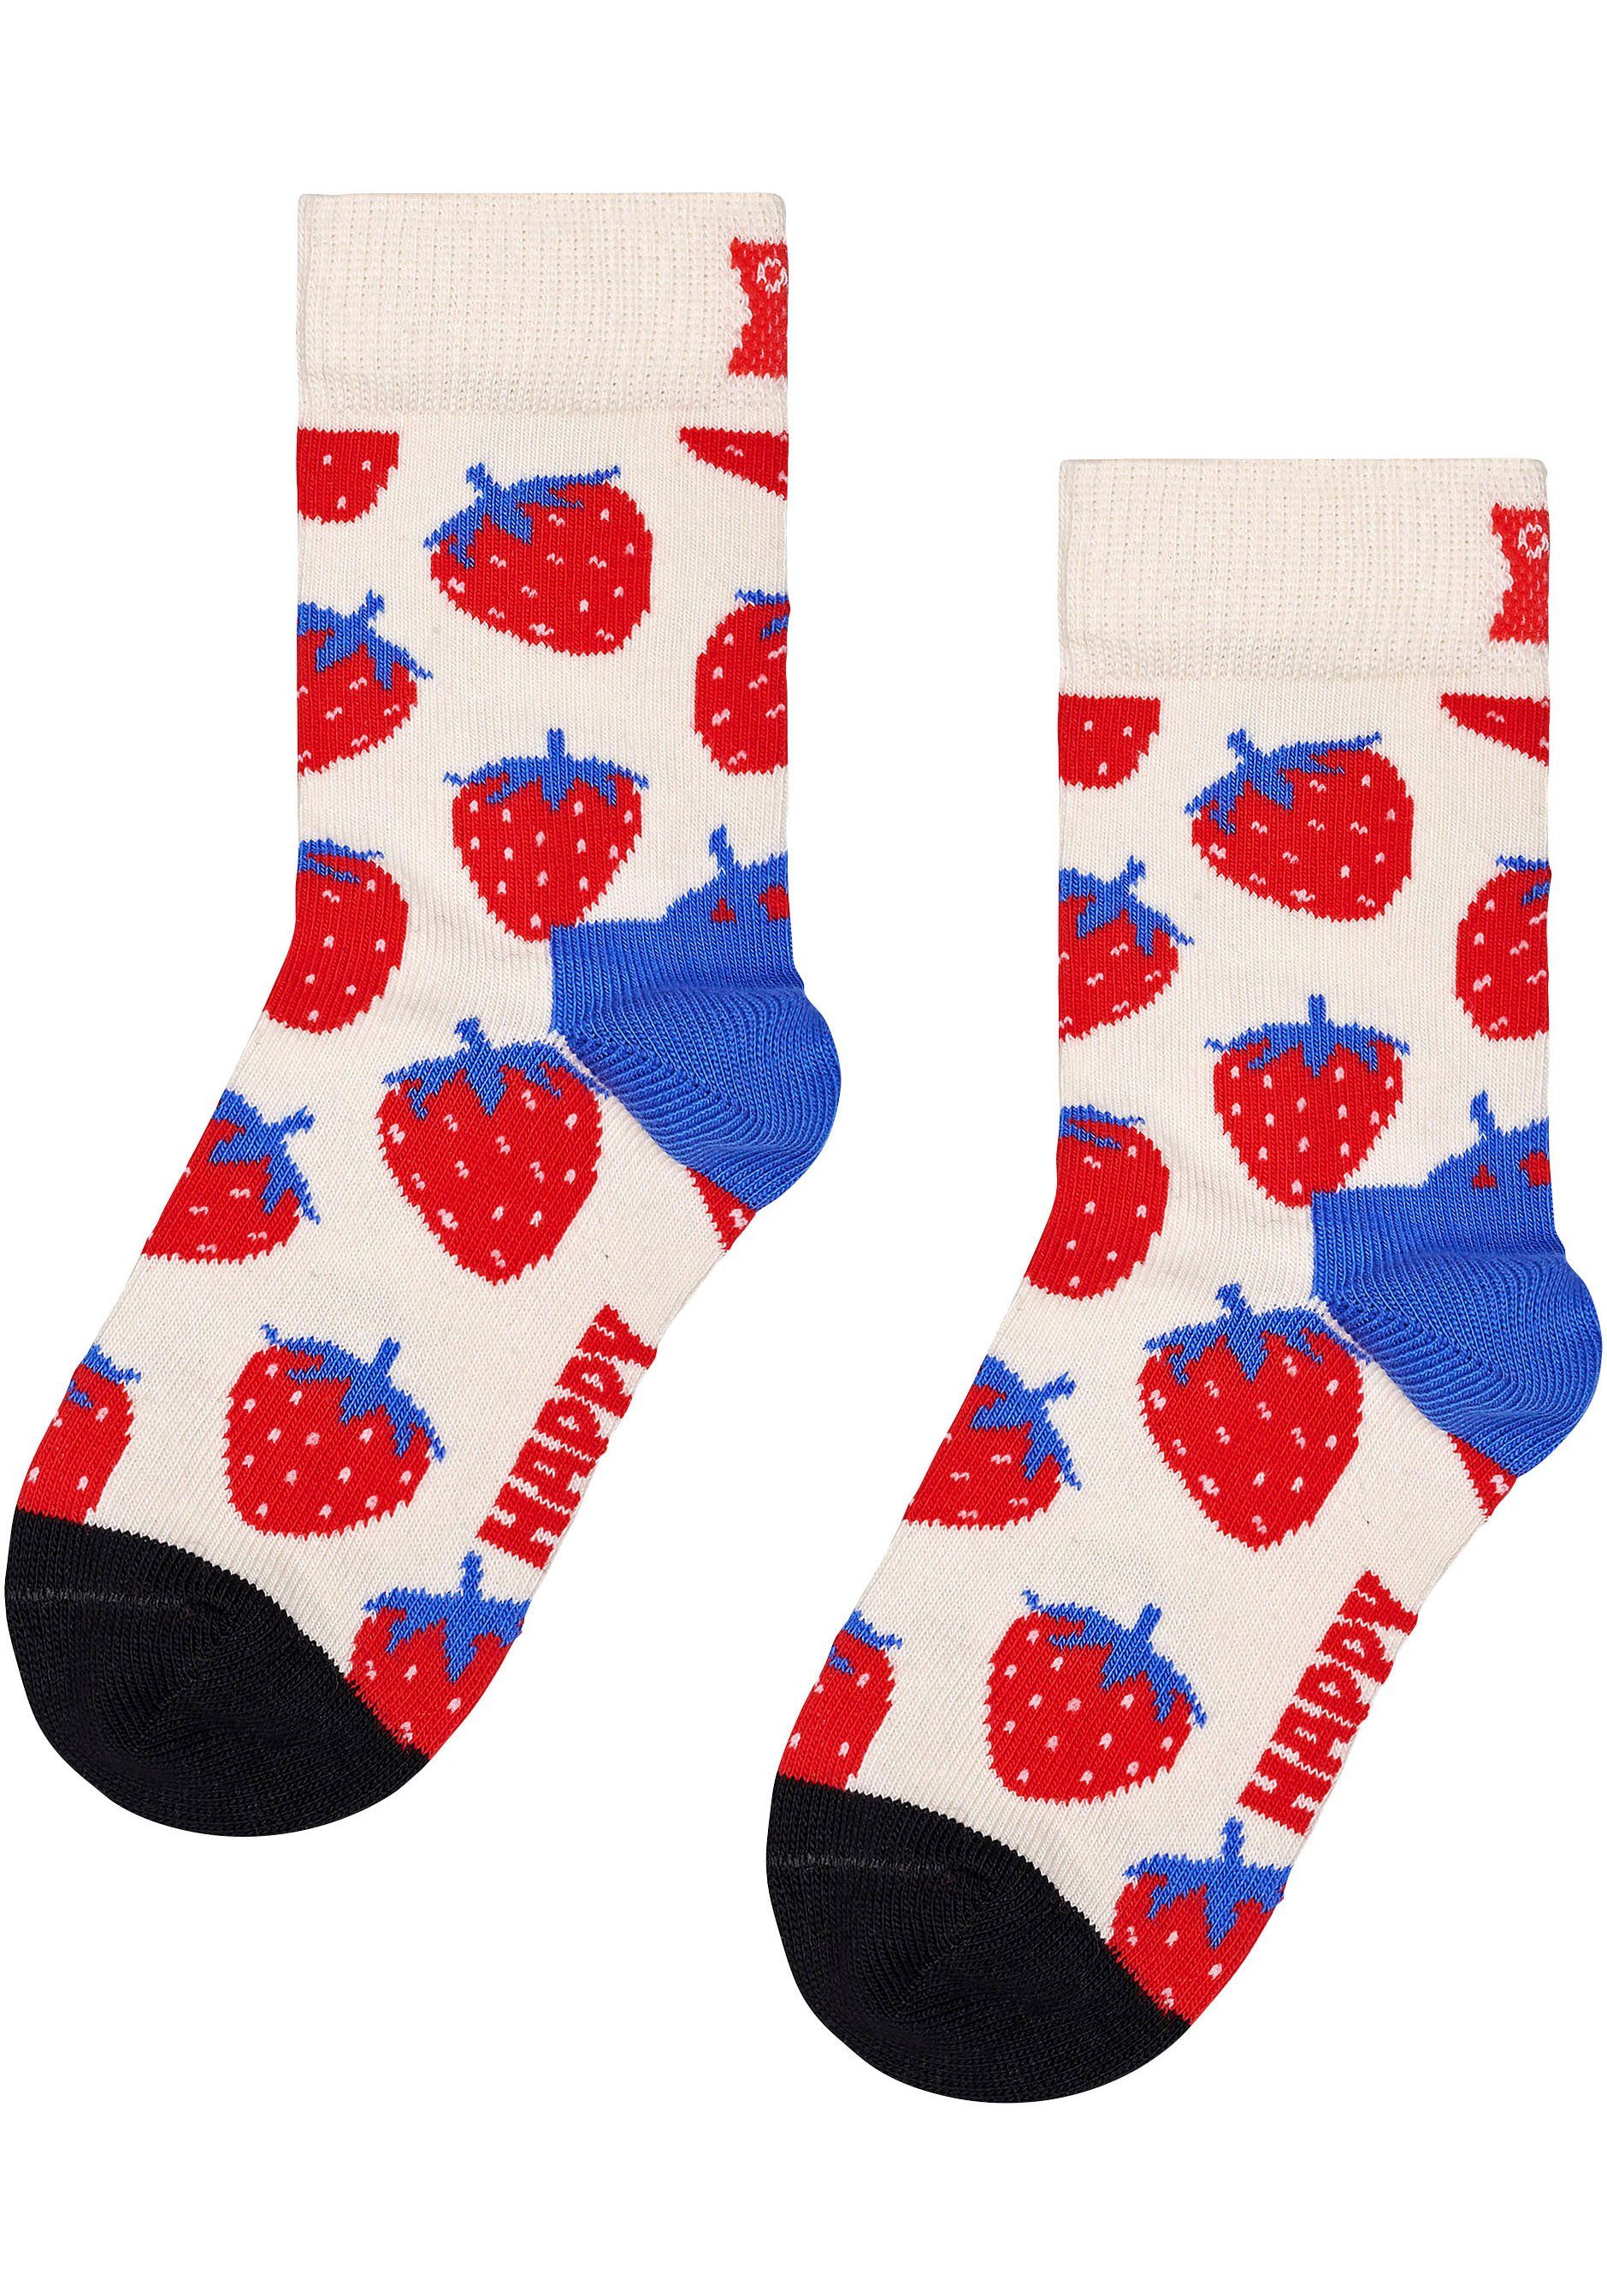 & And Fruits Socks (3-Paar) Set Happy Berries Fruit Socken Gift Berry